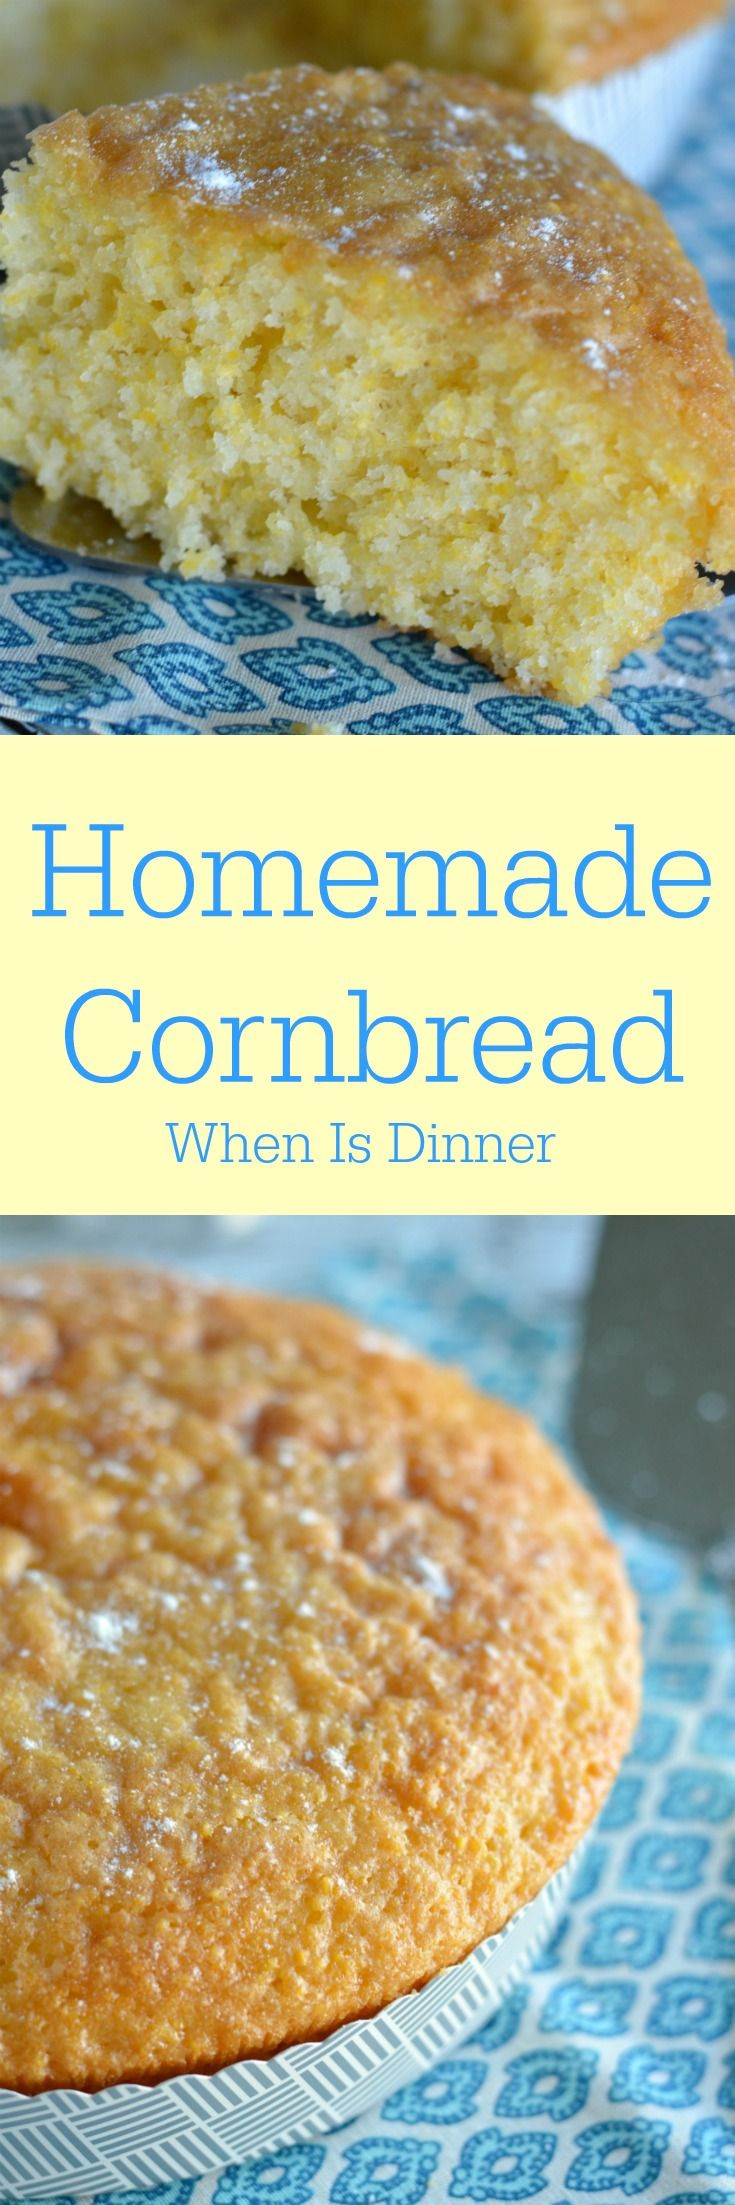 How To Make Homemade Cornbread
 Homemade Cornbread Recipe